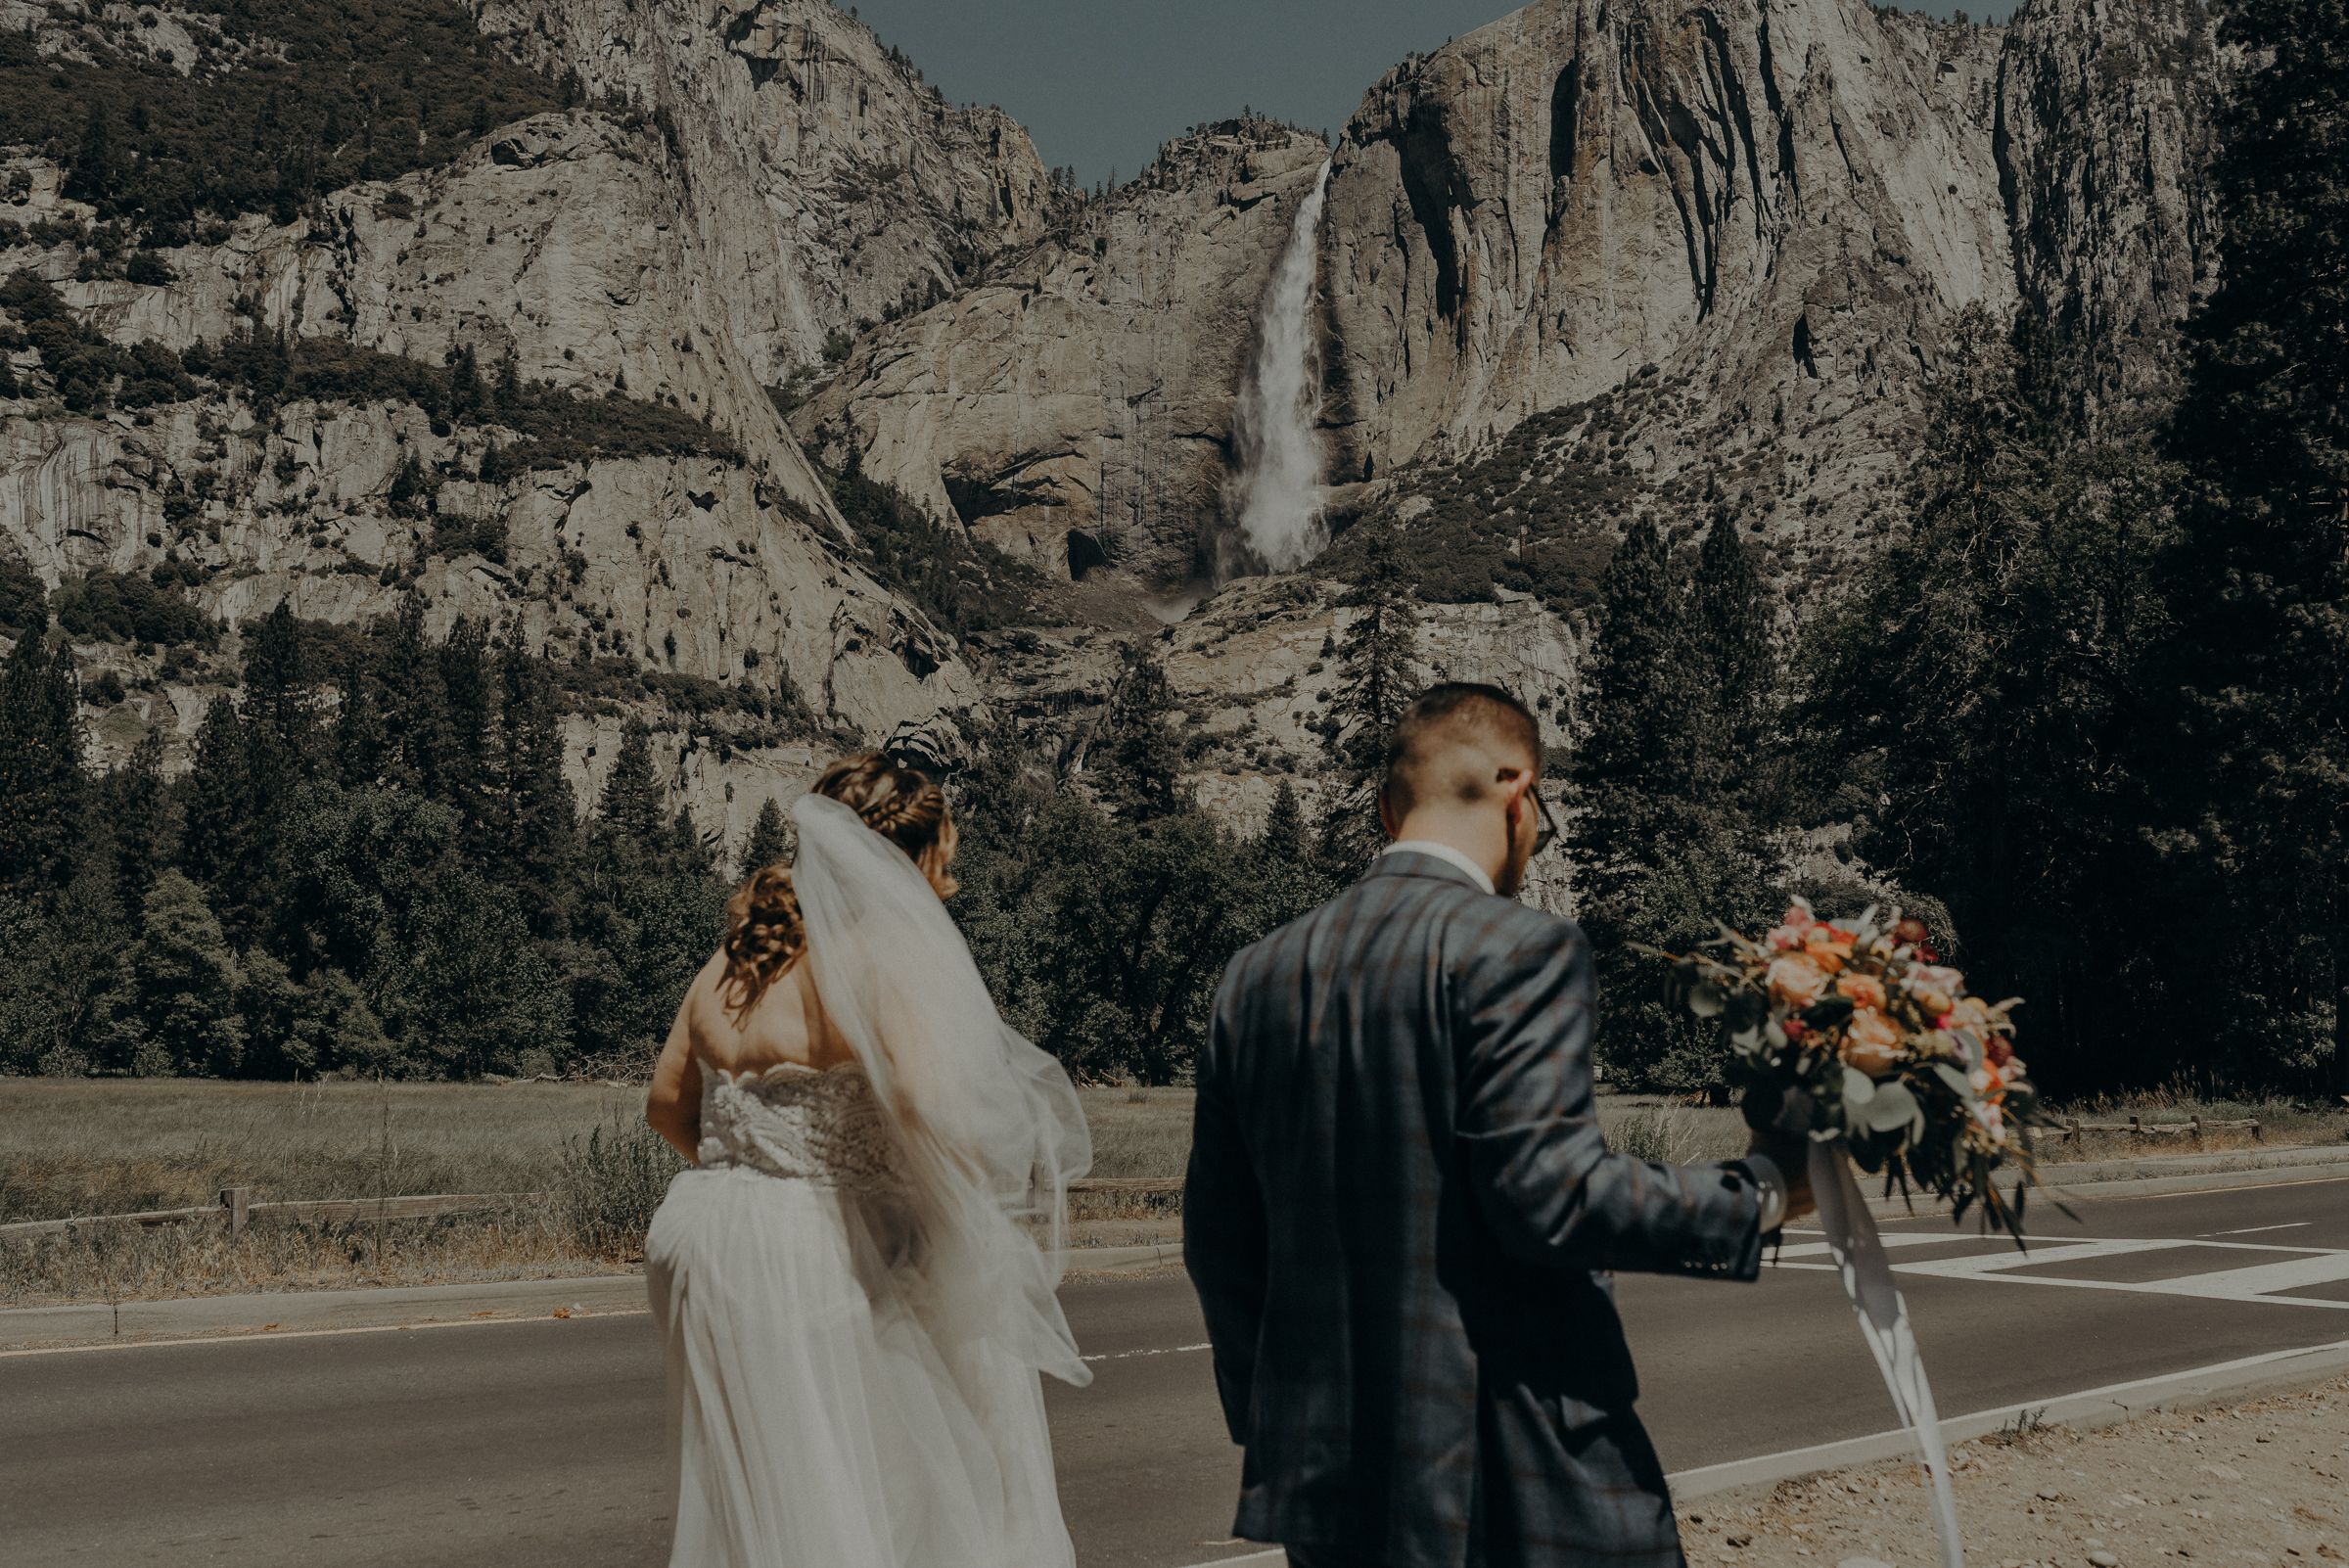 Los Angeles Wedding Photographers - Yosemite Destination Wedding Elopement - IsaiahAndTaylor.com -085.jpg